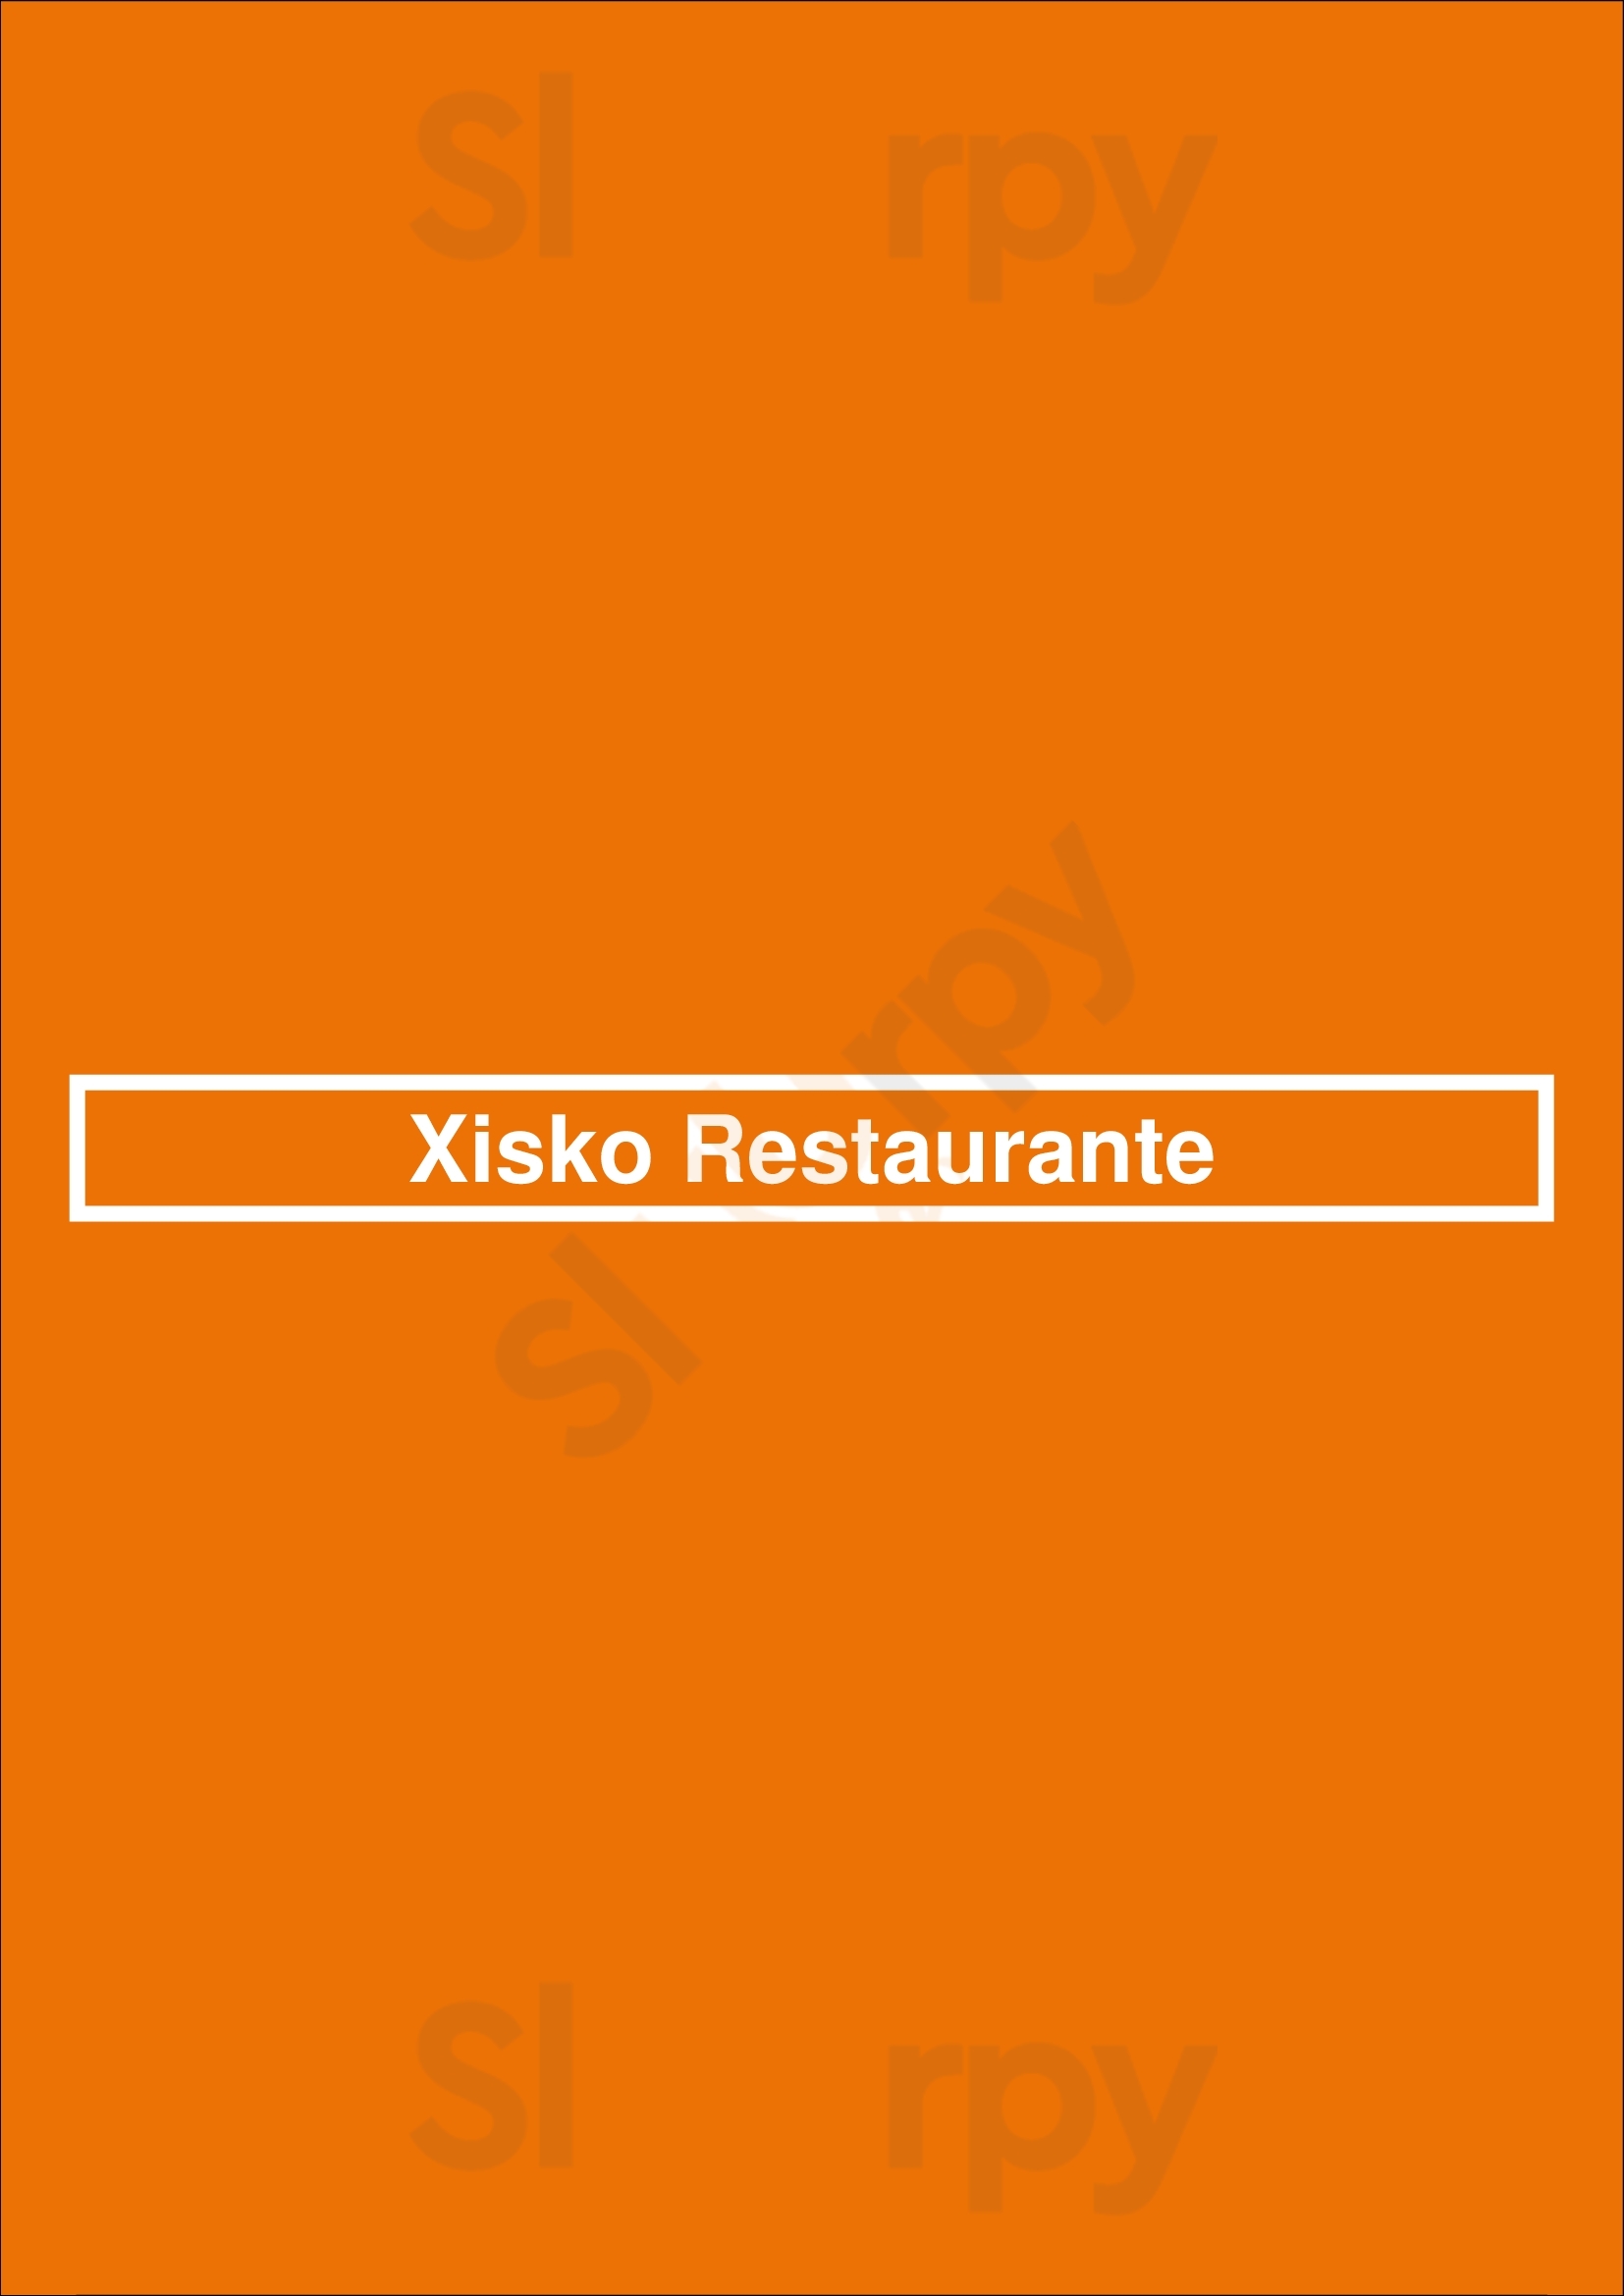 Xisko Restaurante Guimarães Menu - 1